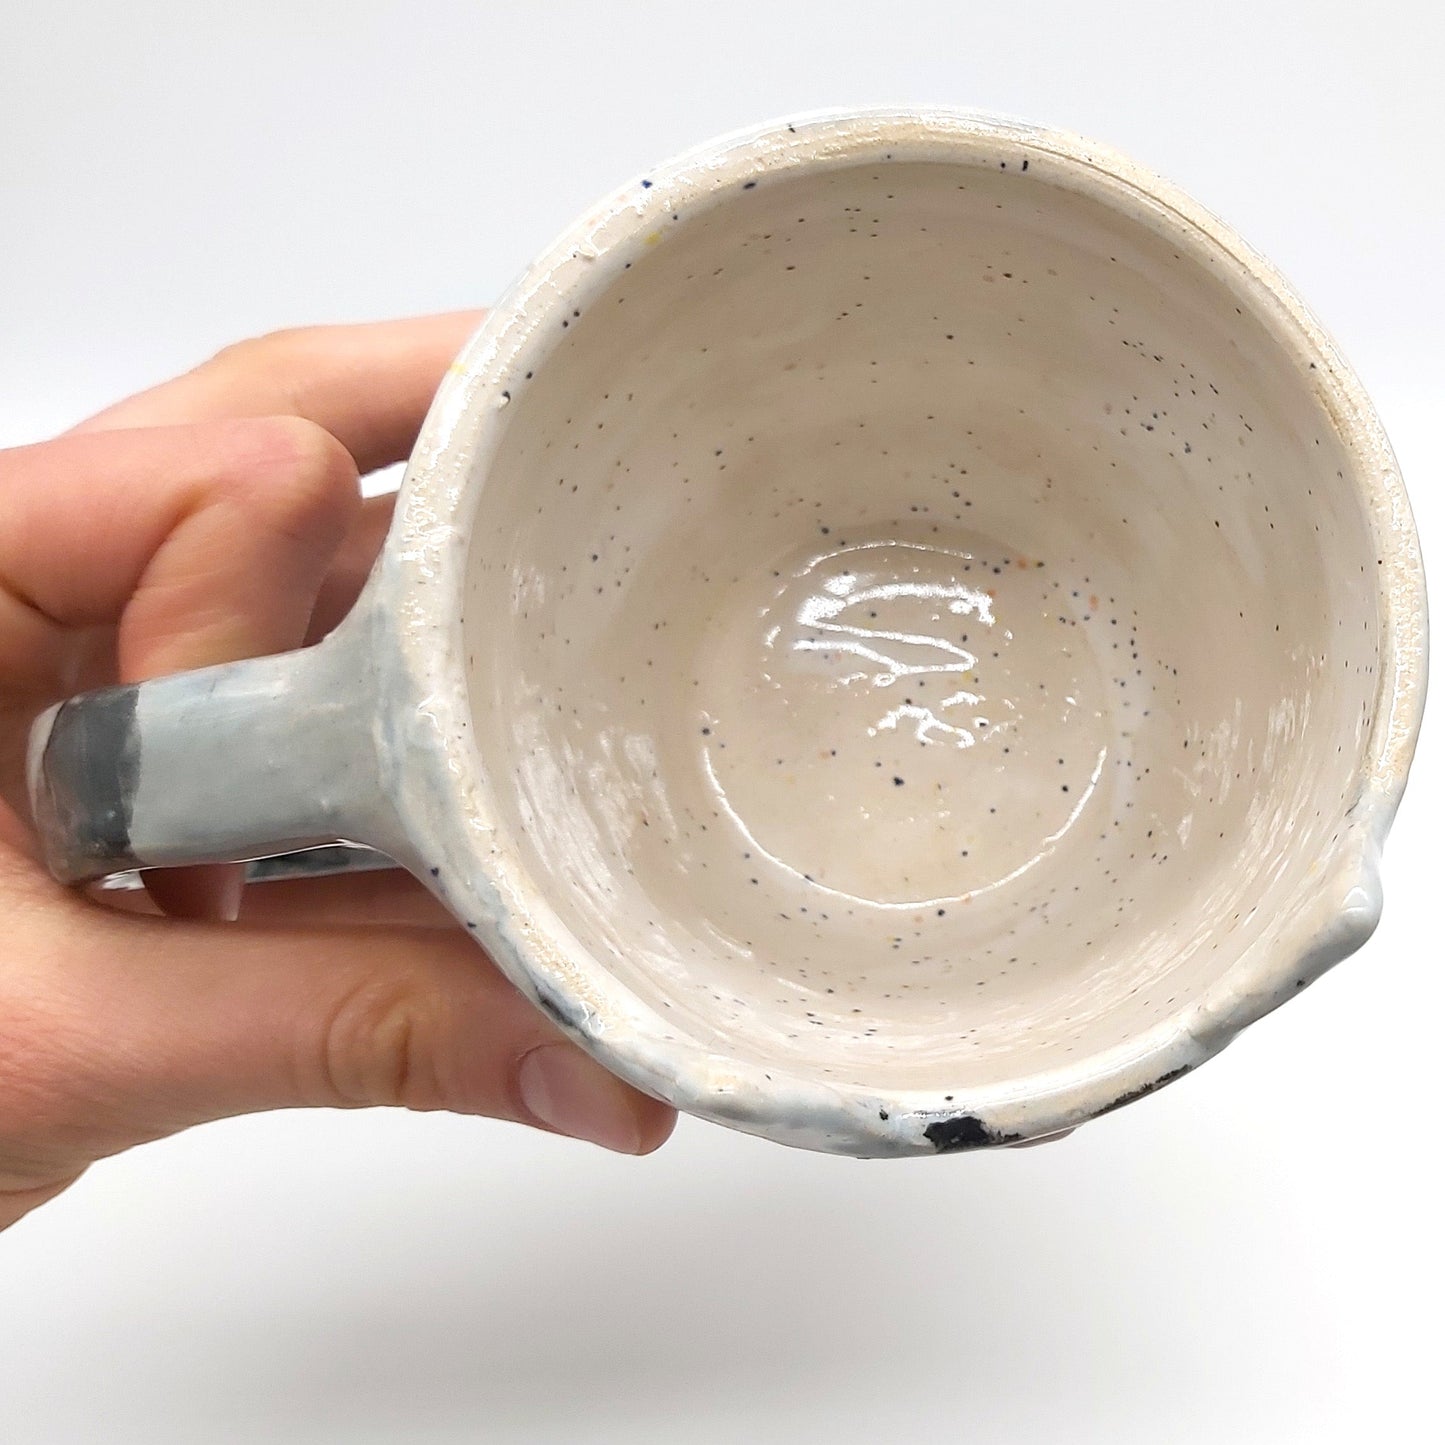 Grey Tabby Cat Mug (I)